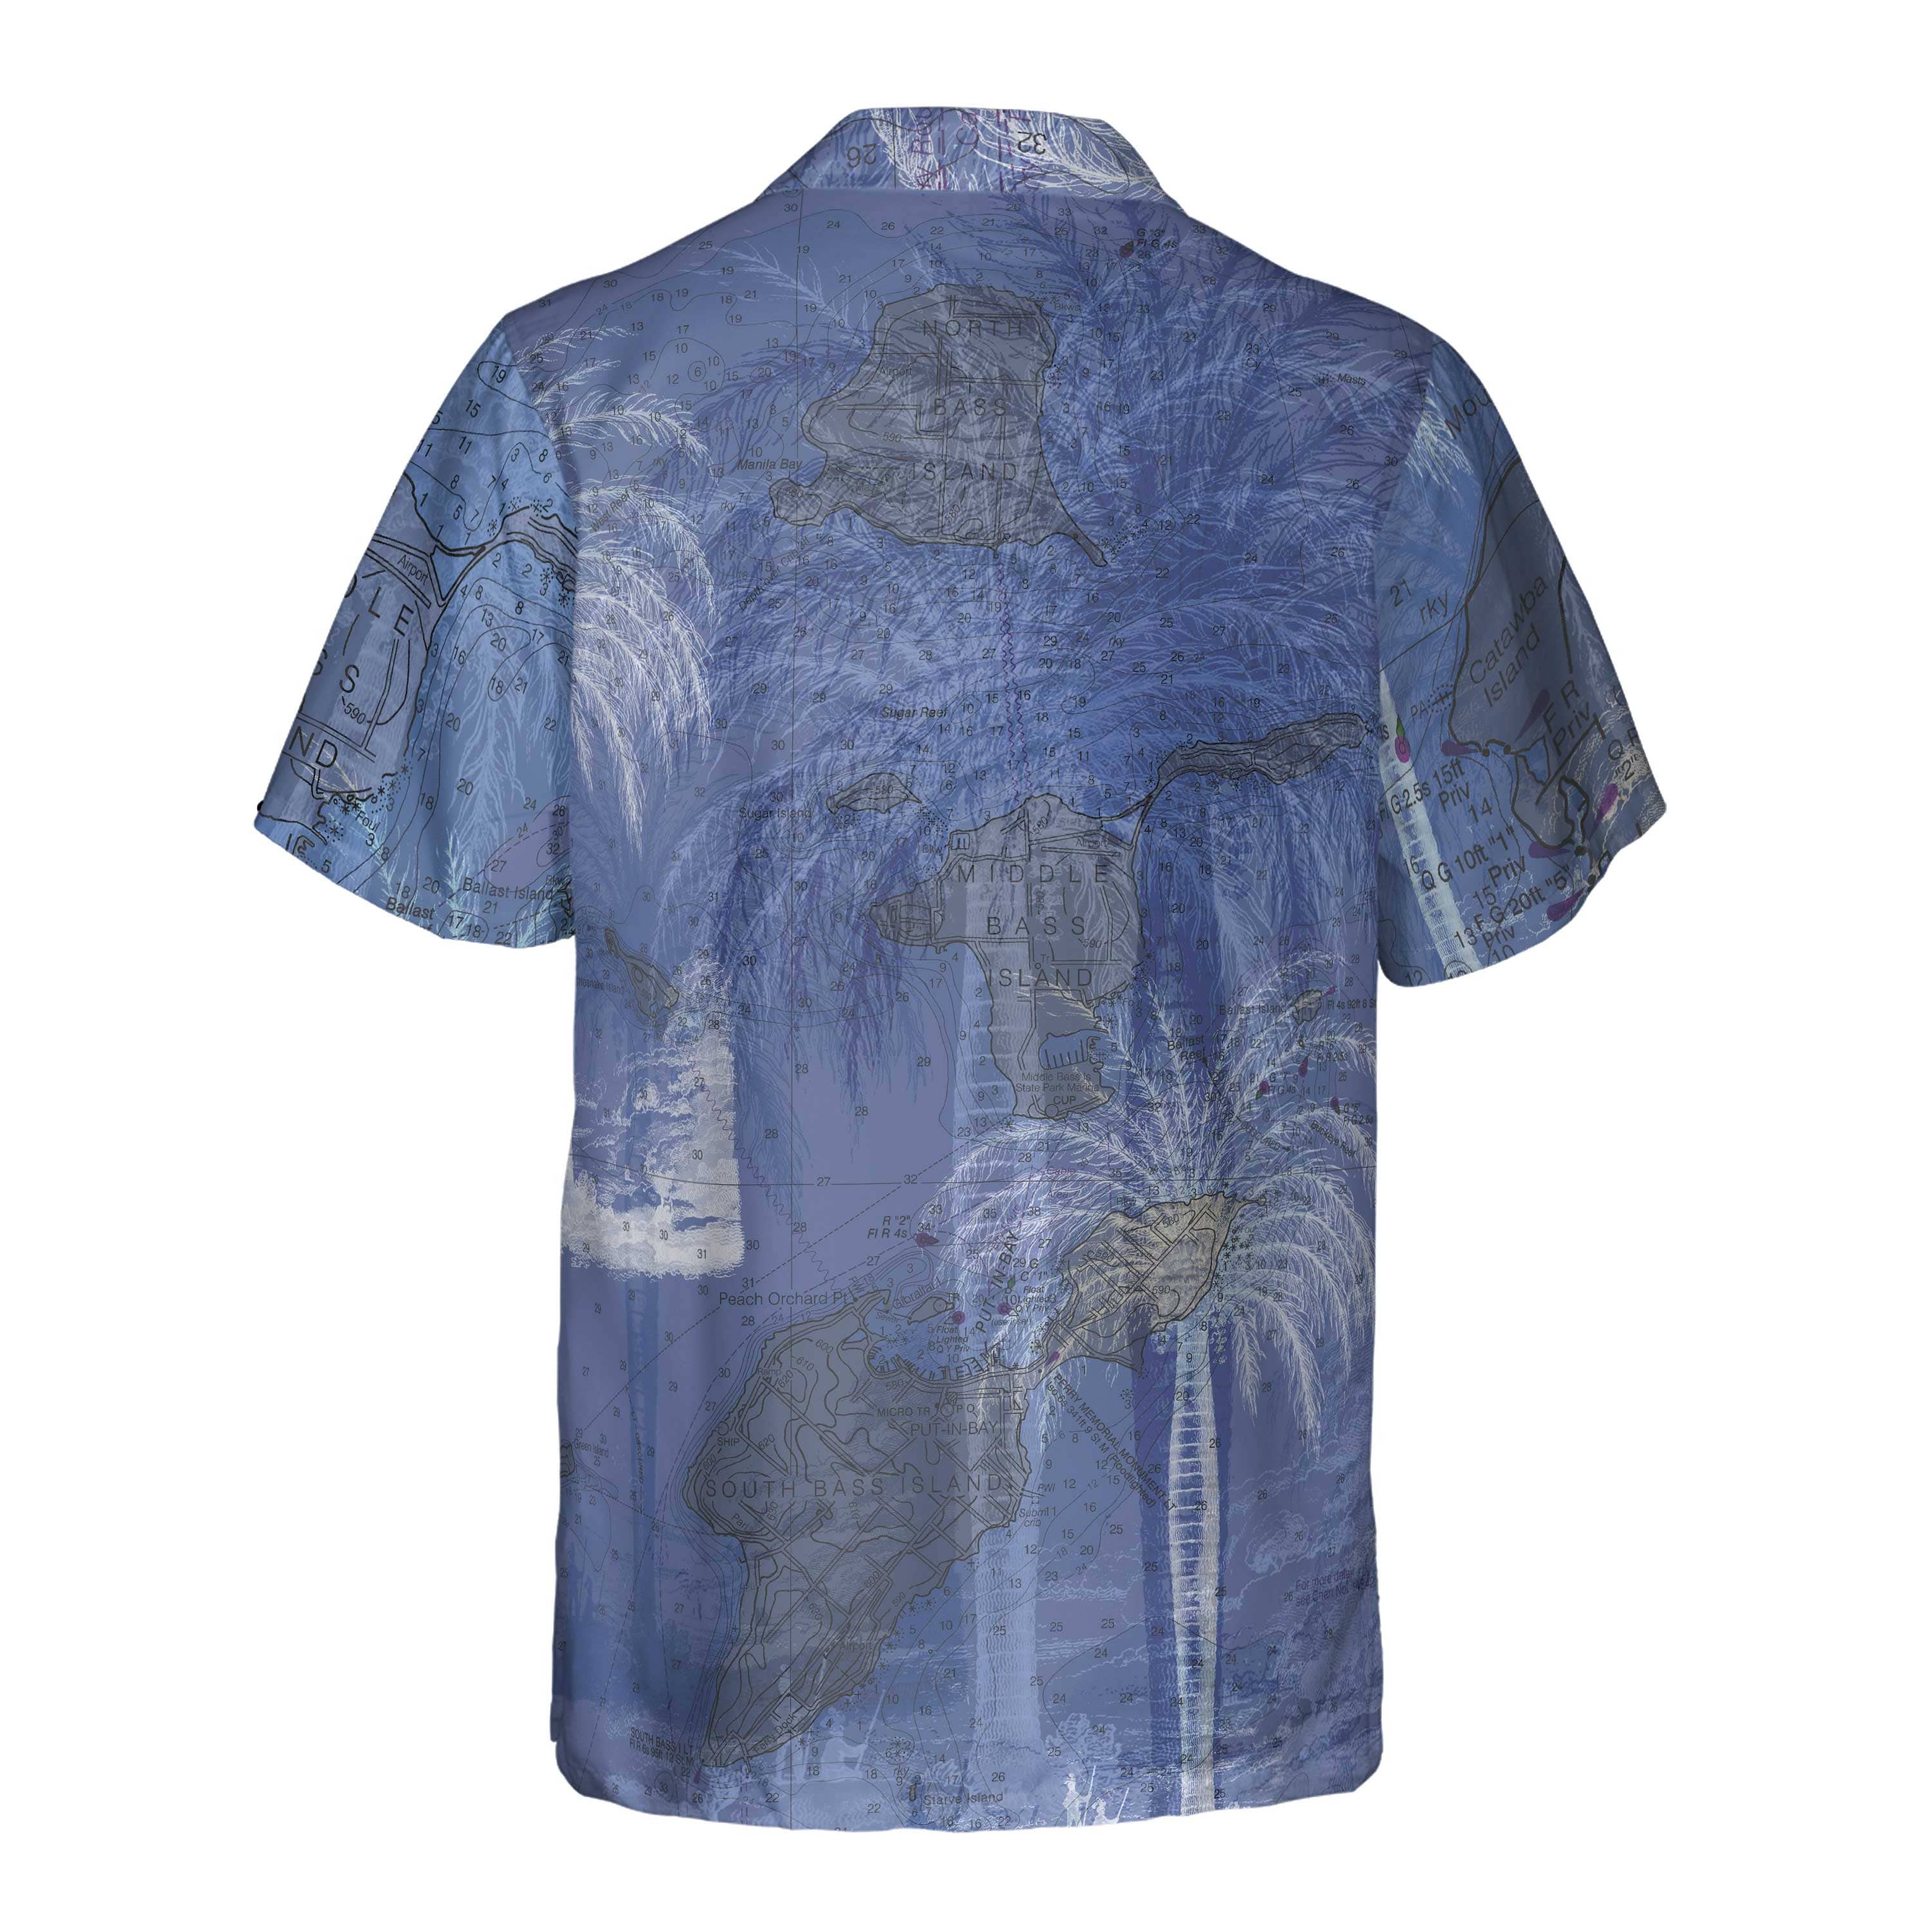 The Lake Erie Islands Soft Blue Palms Pocket Shirt